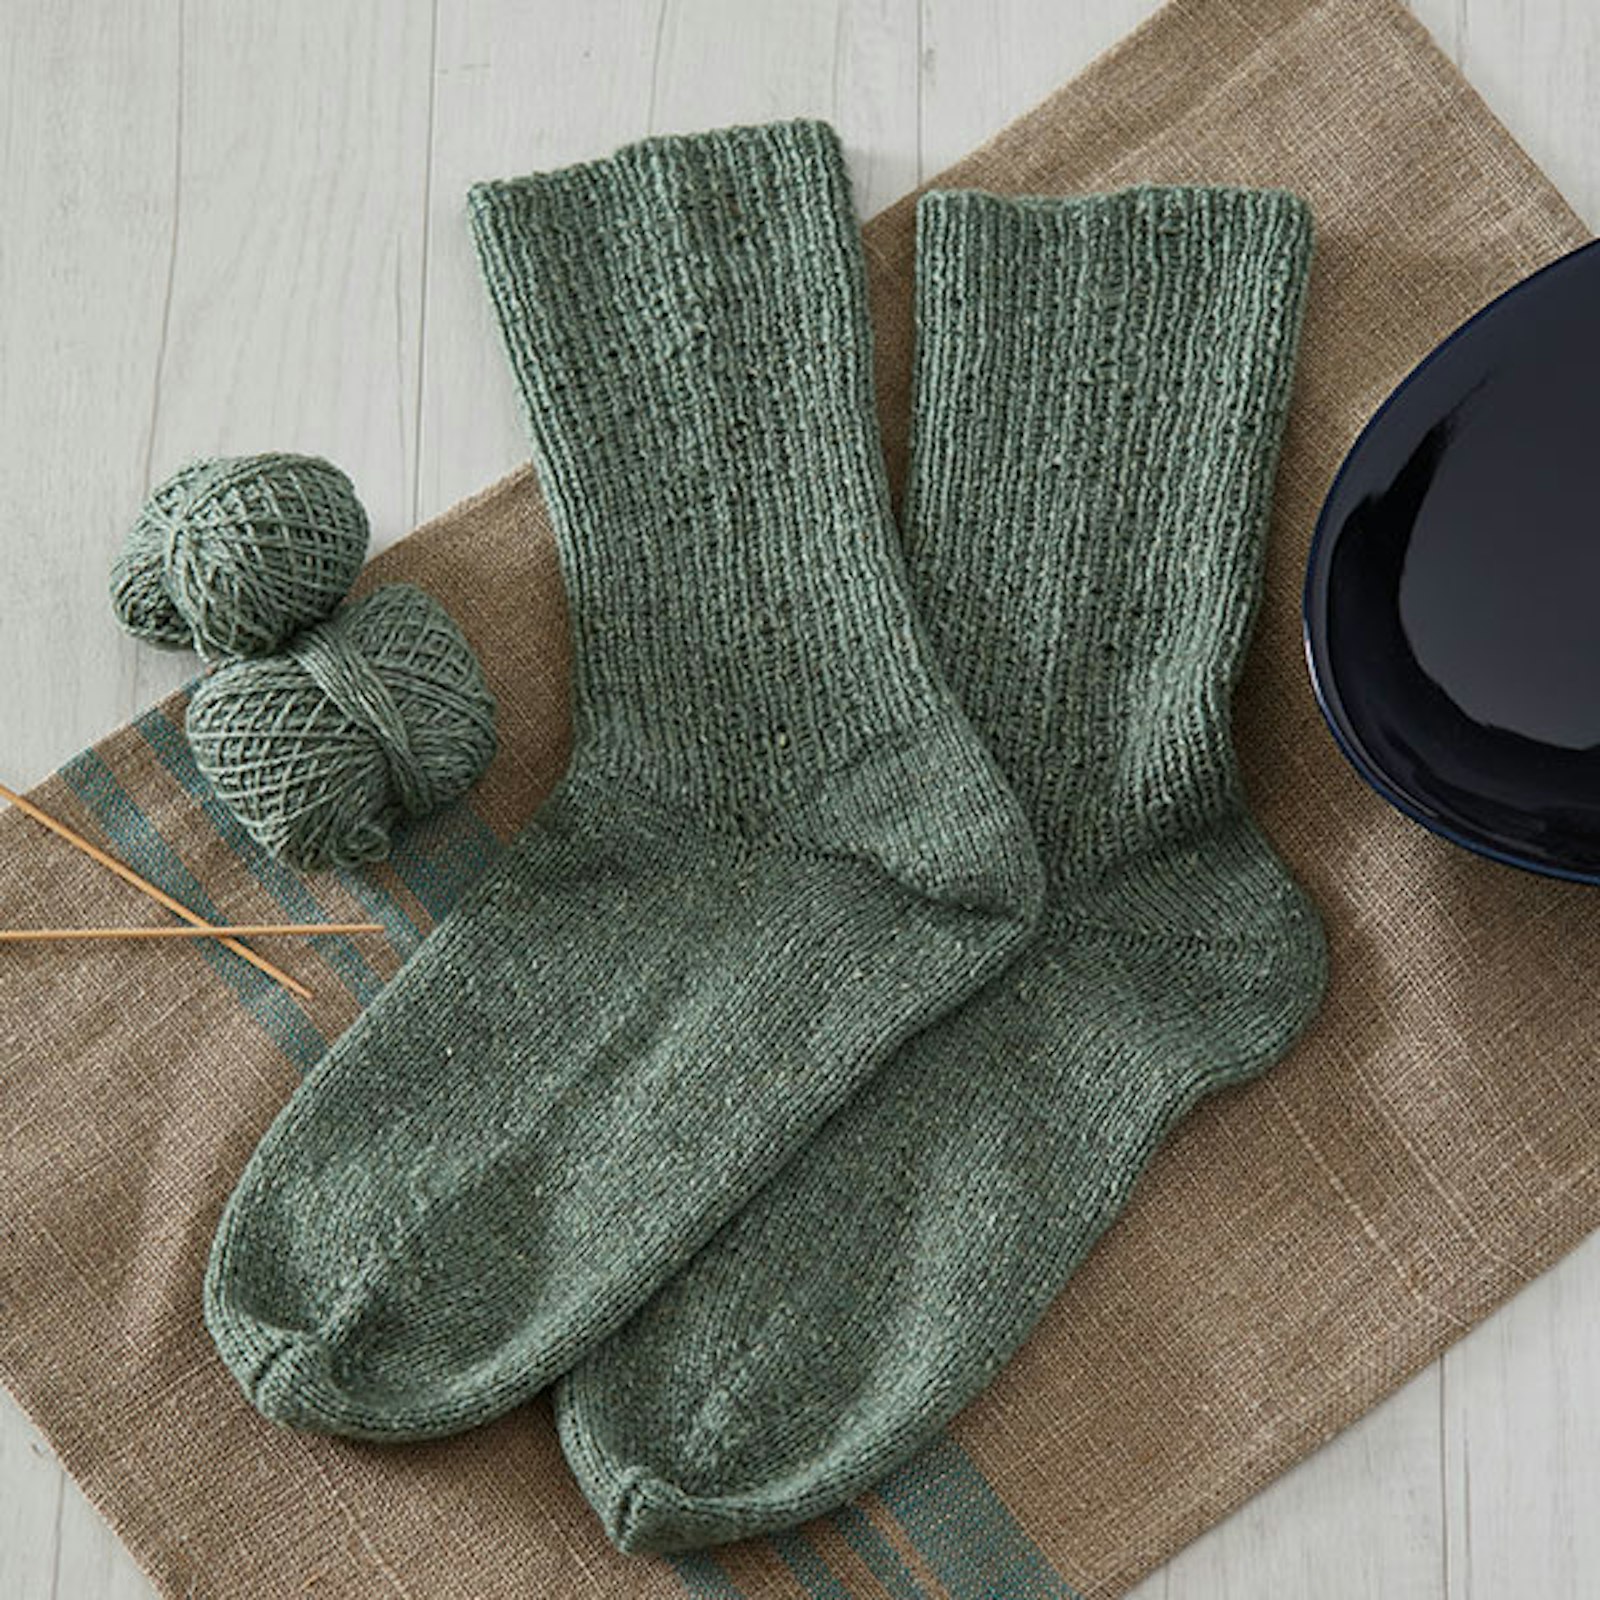 Swedish-Influenced Raggsocks: Luxurious Knitted Socks for Everyday